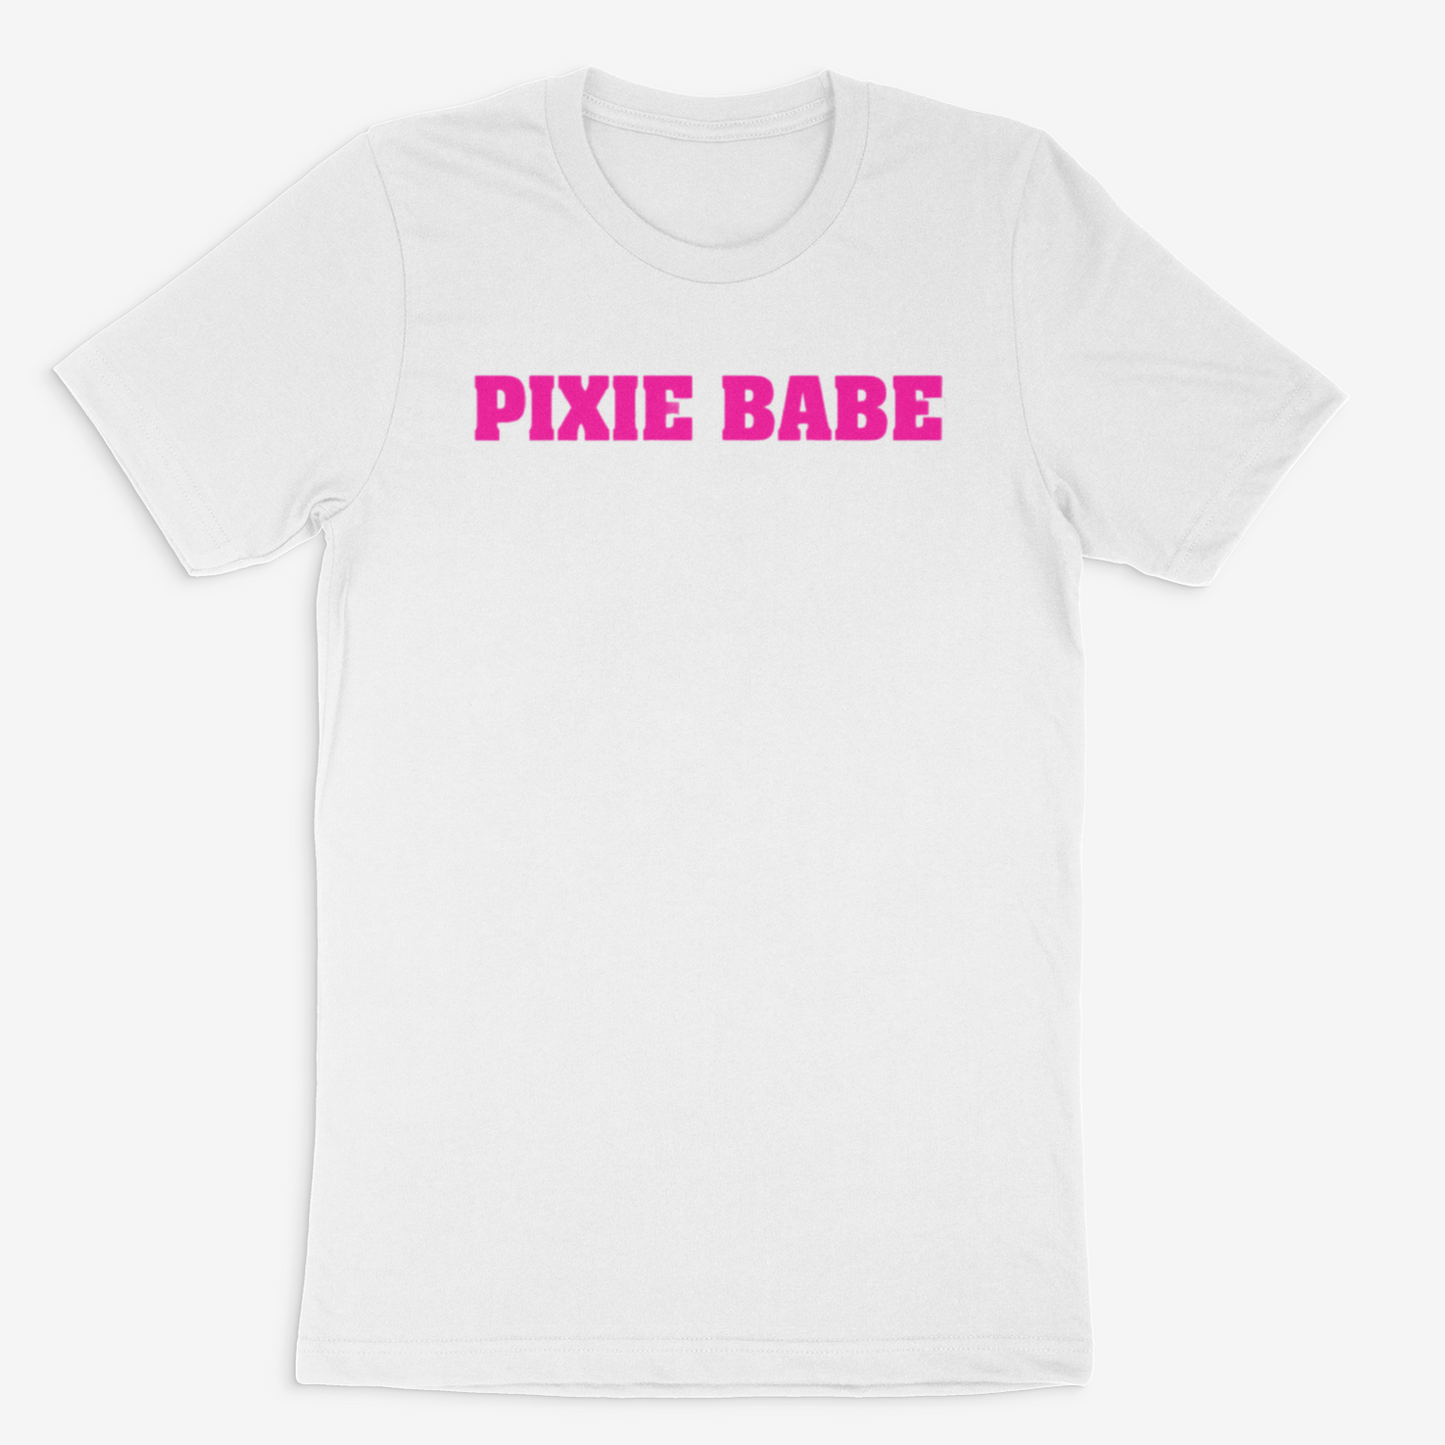 Pixie Babe ( Pink) Tee